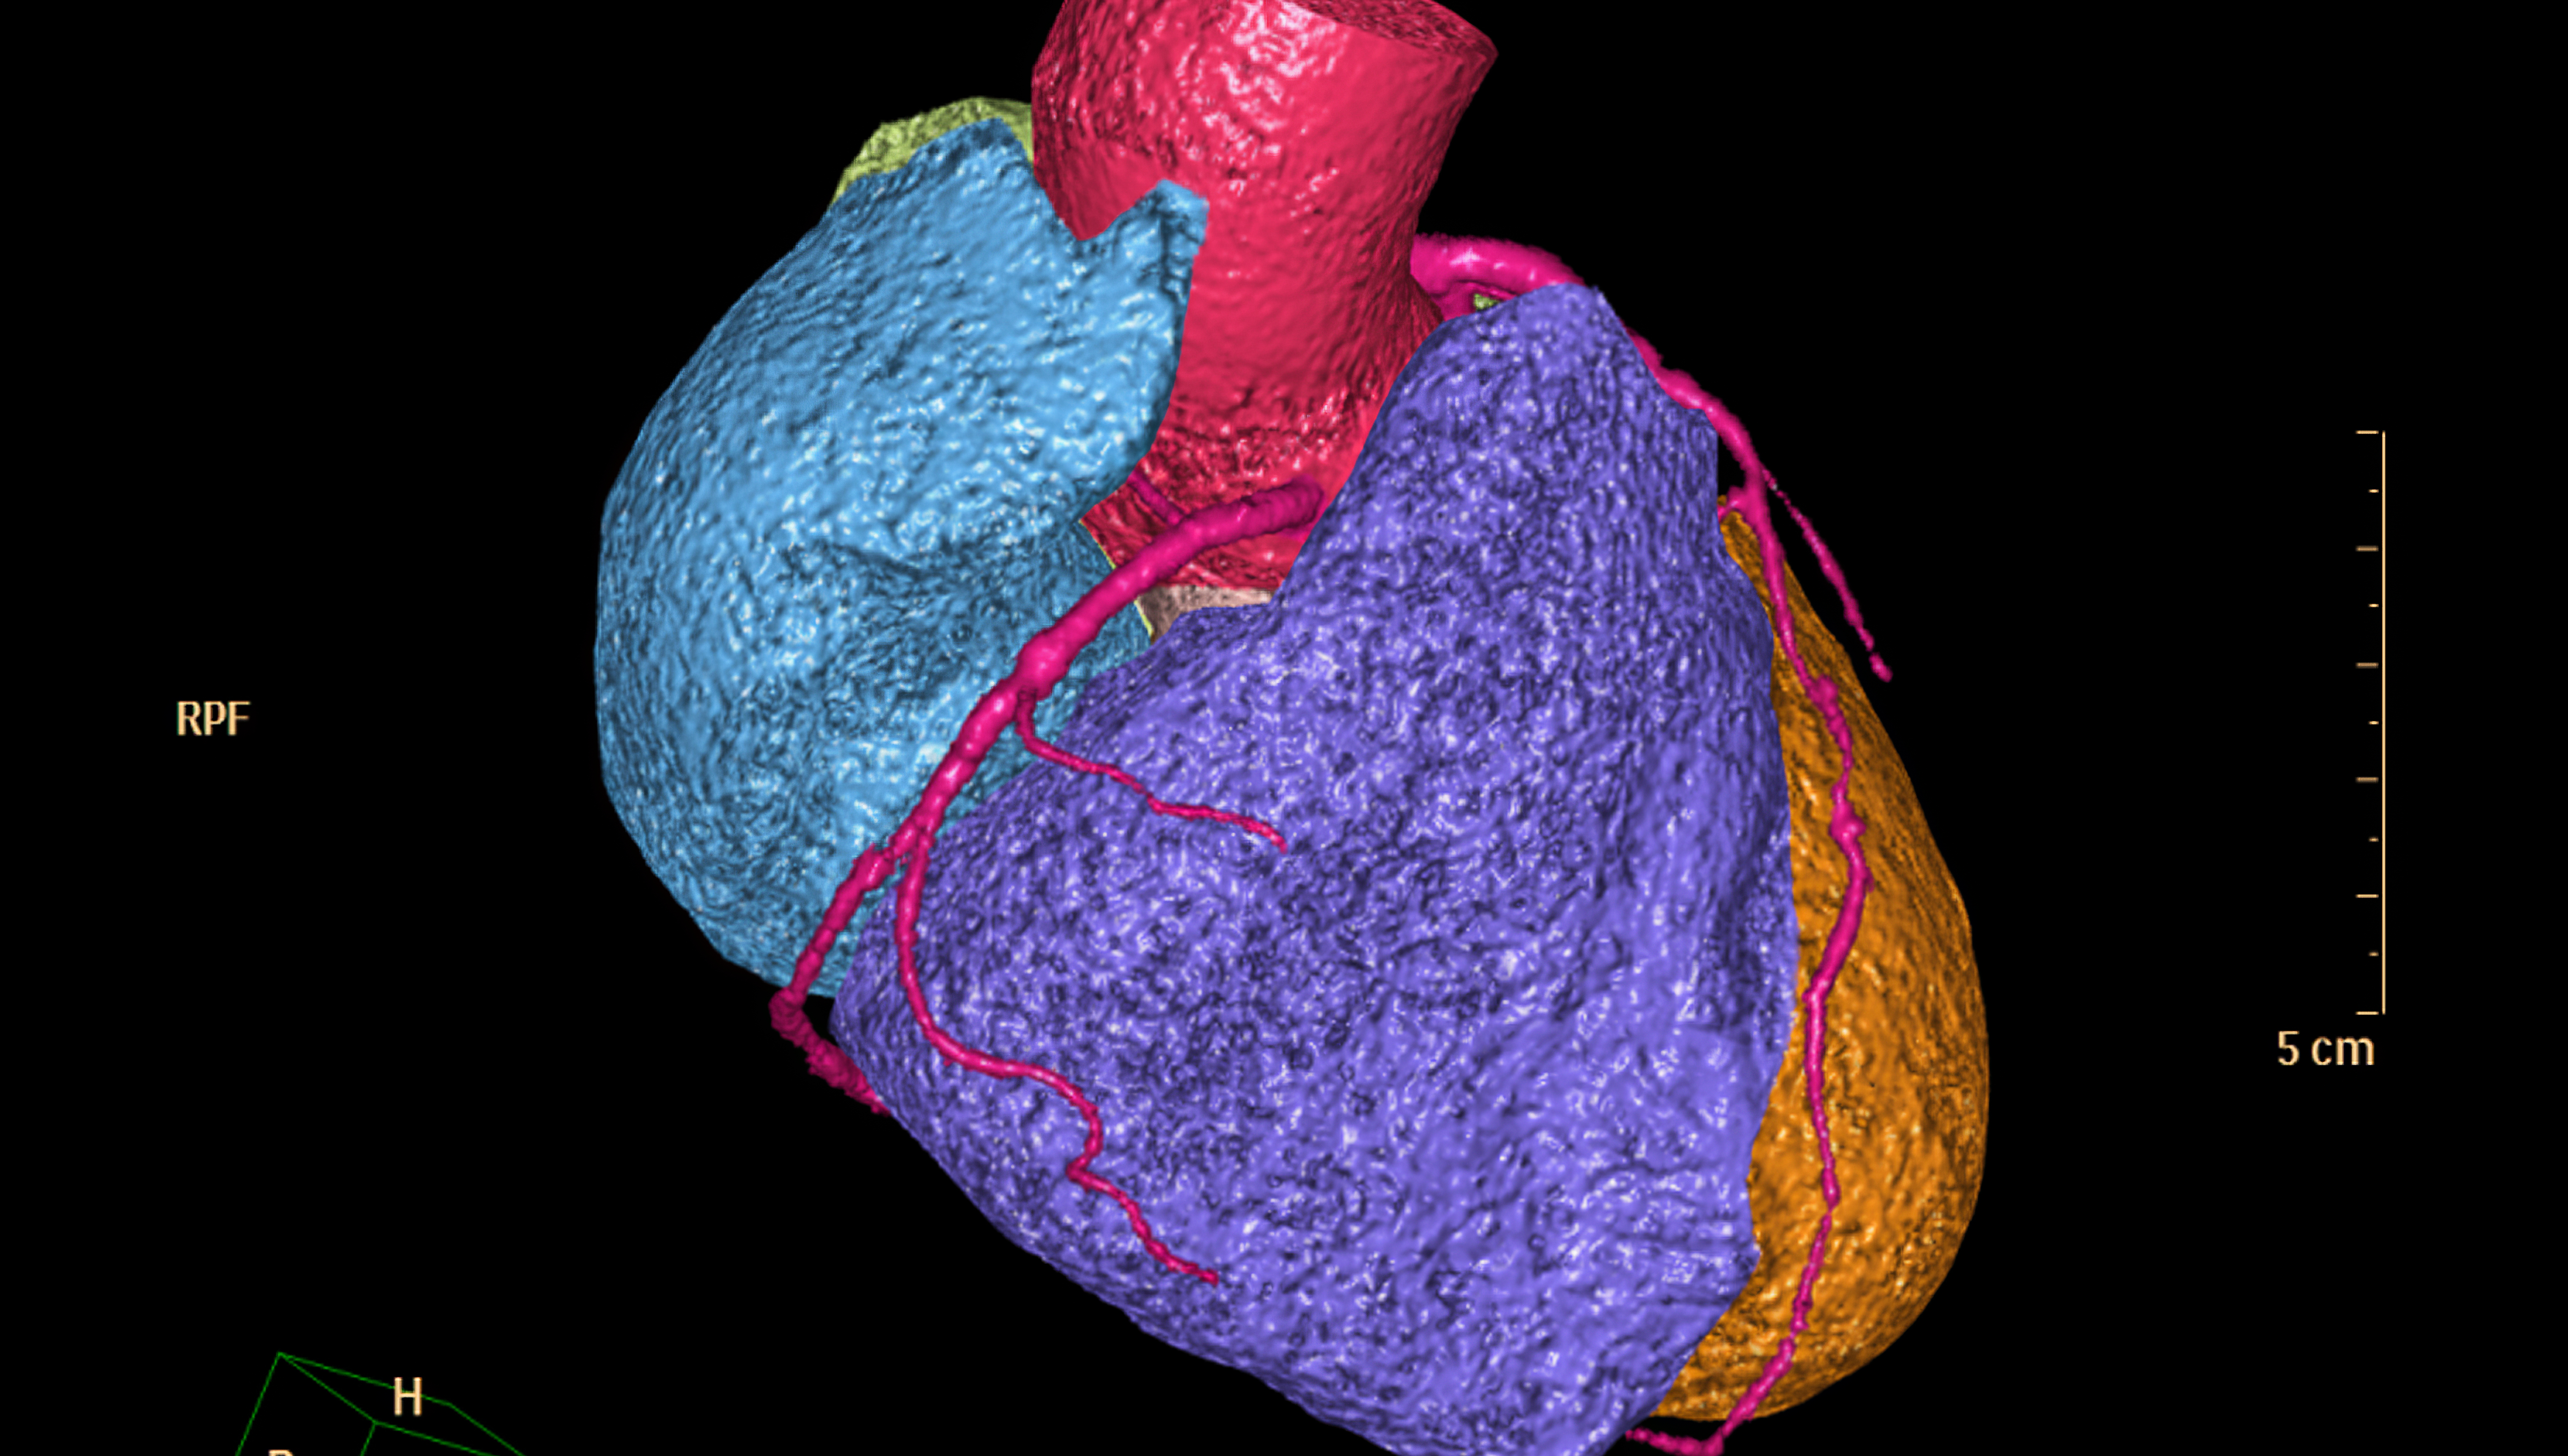 CTA Coronary artery image for detecting coronary artery disease